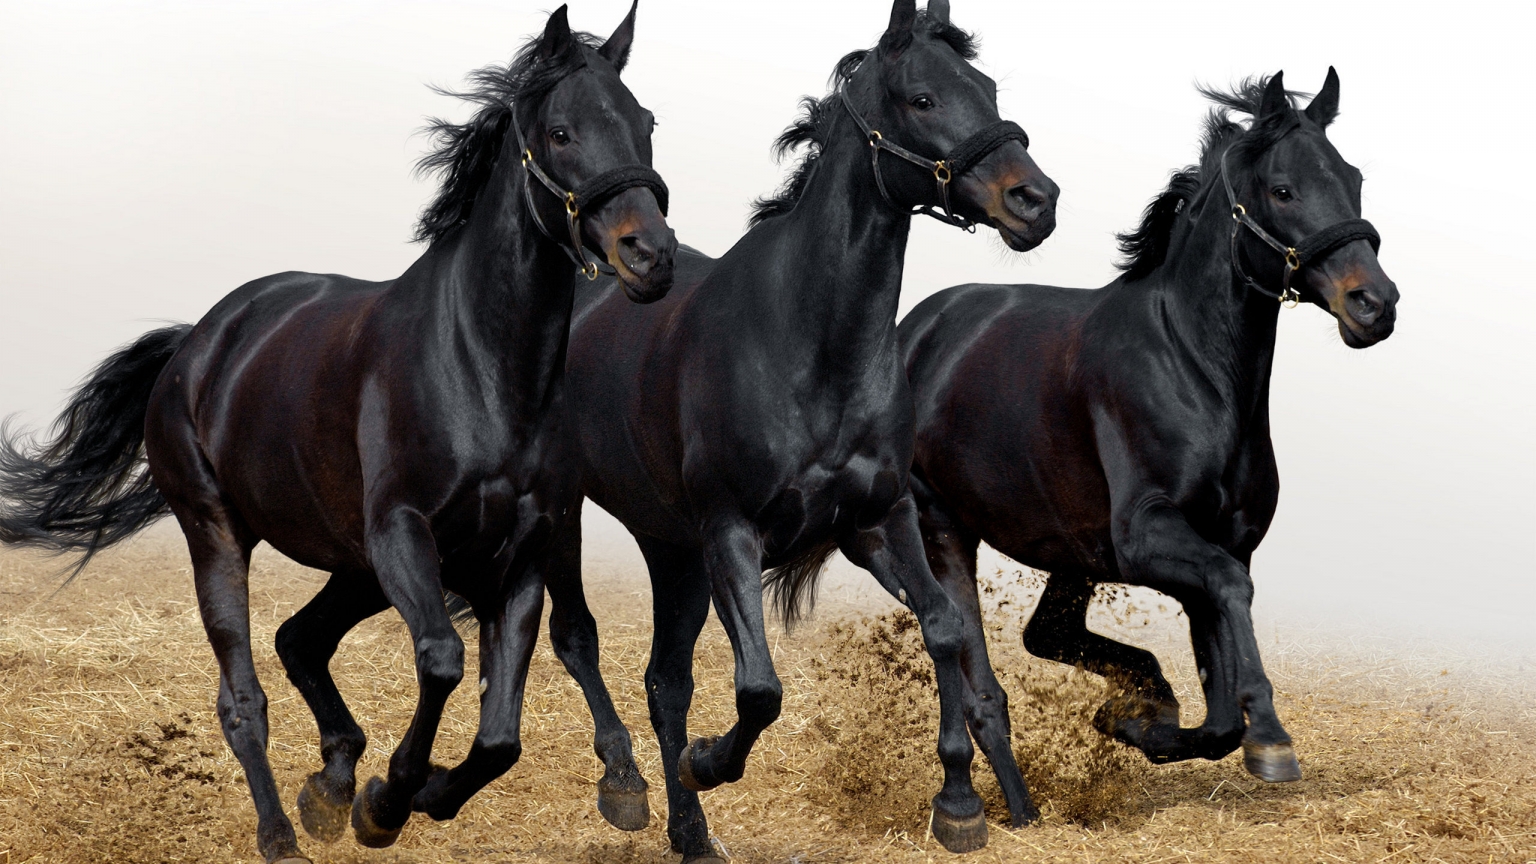 Three Black Horses for 1536 x 864 HDTV resolution